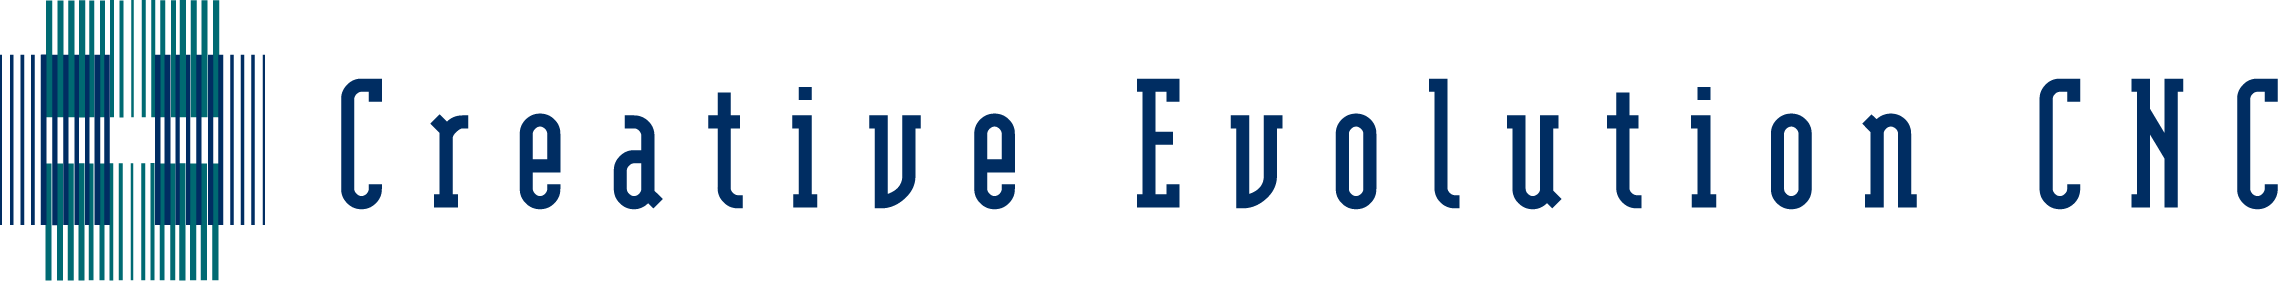 CECNC Logo